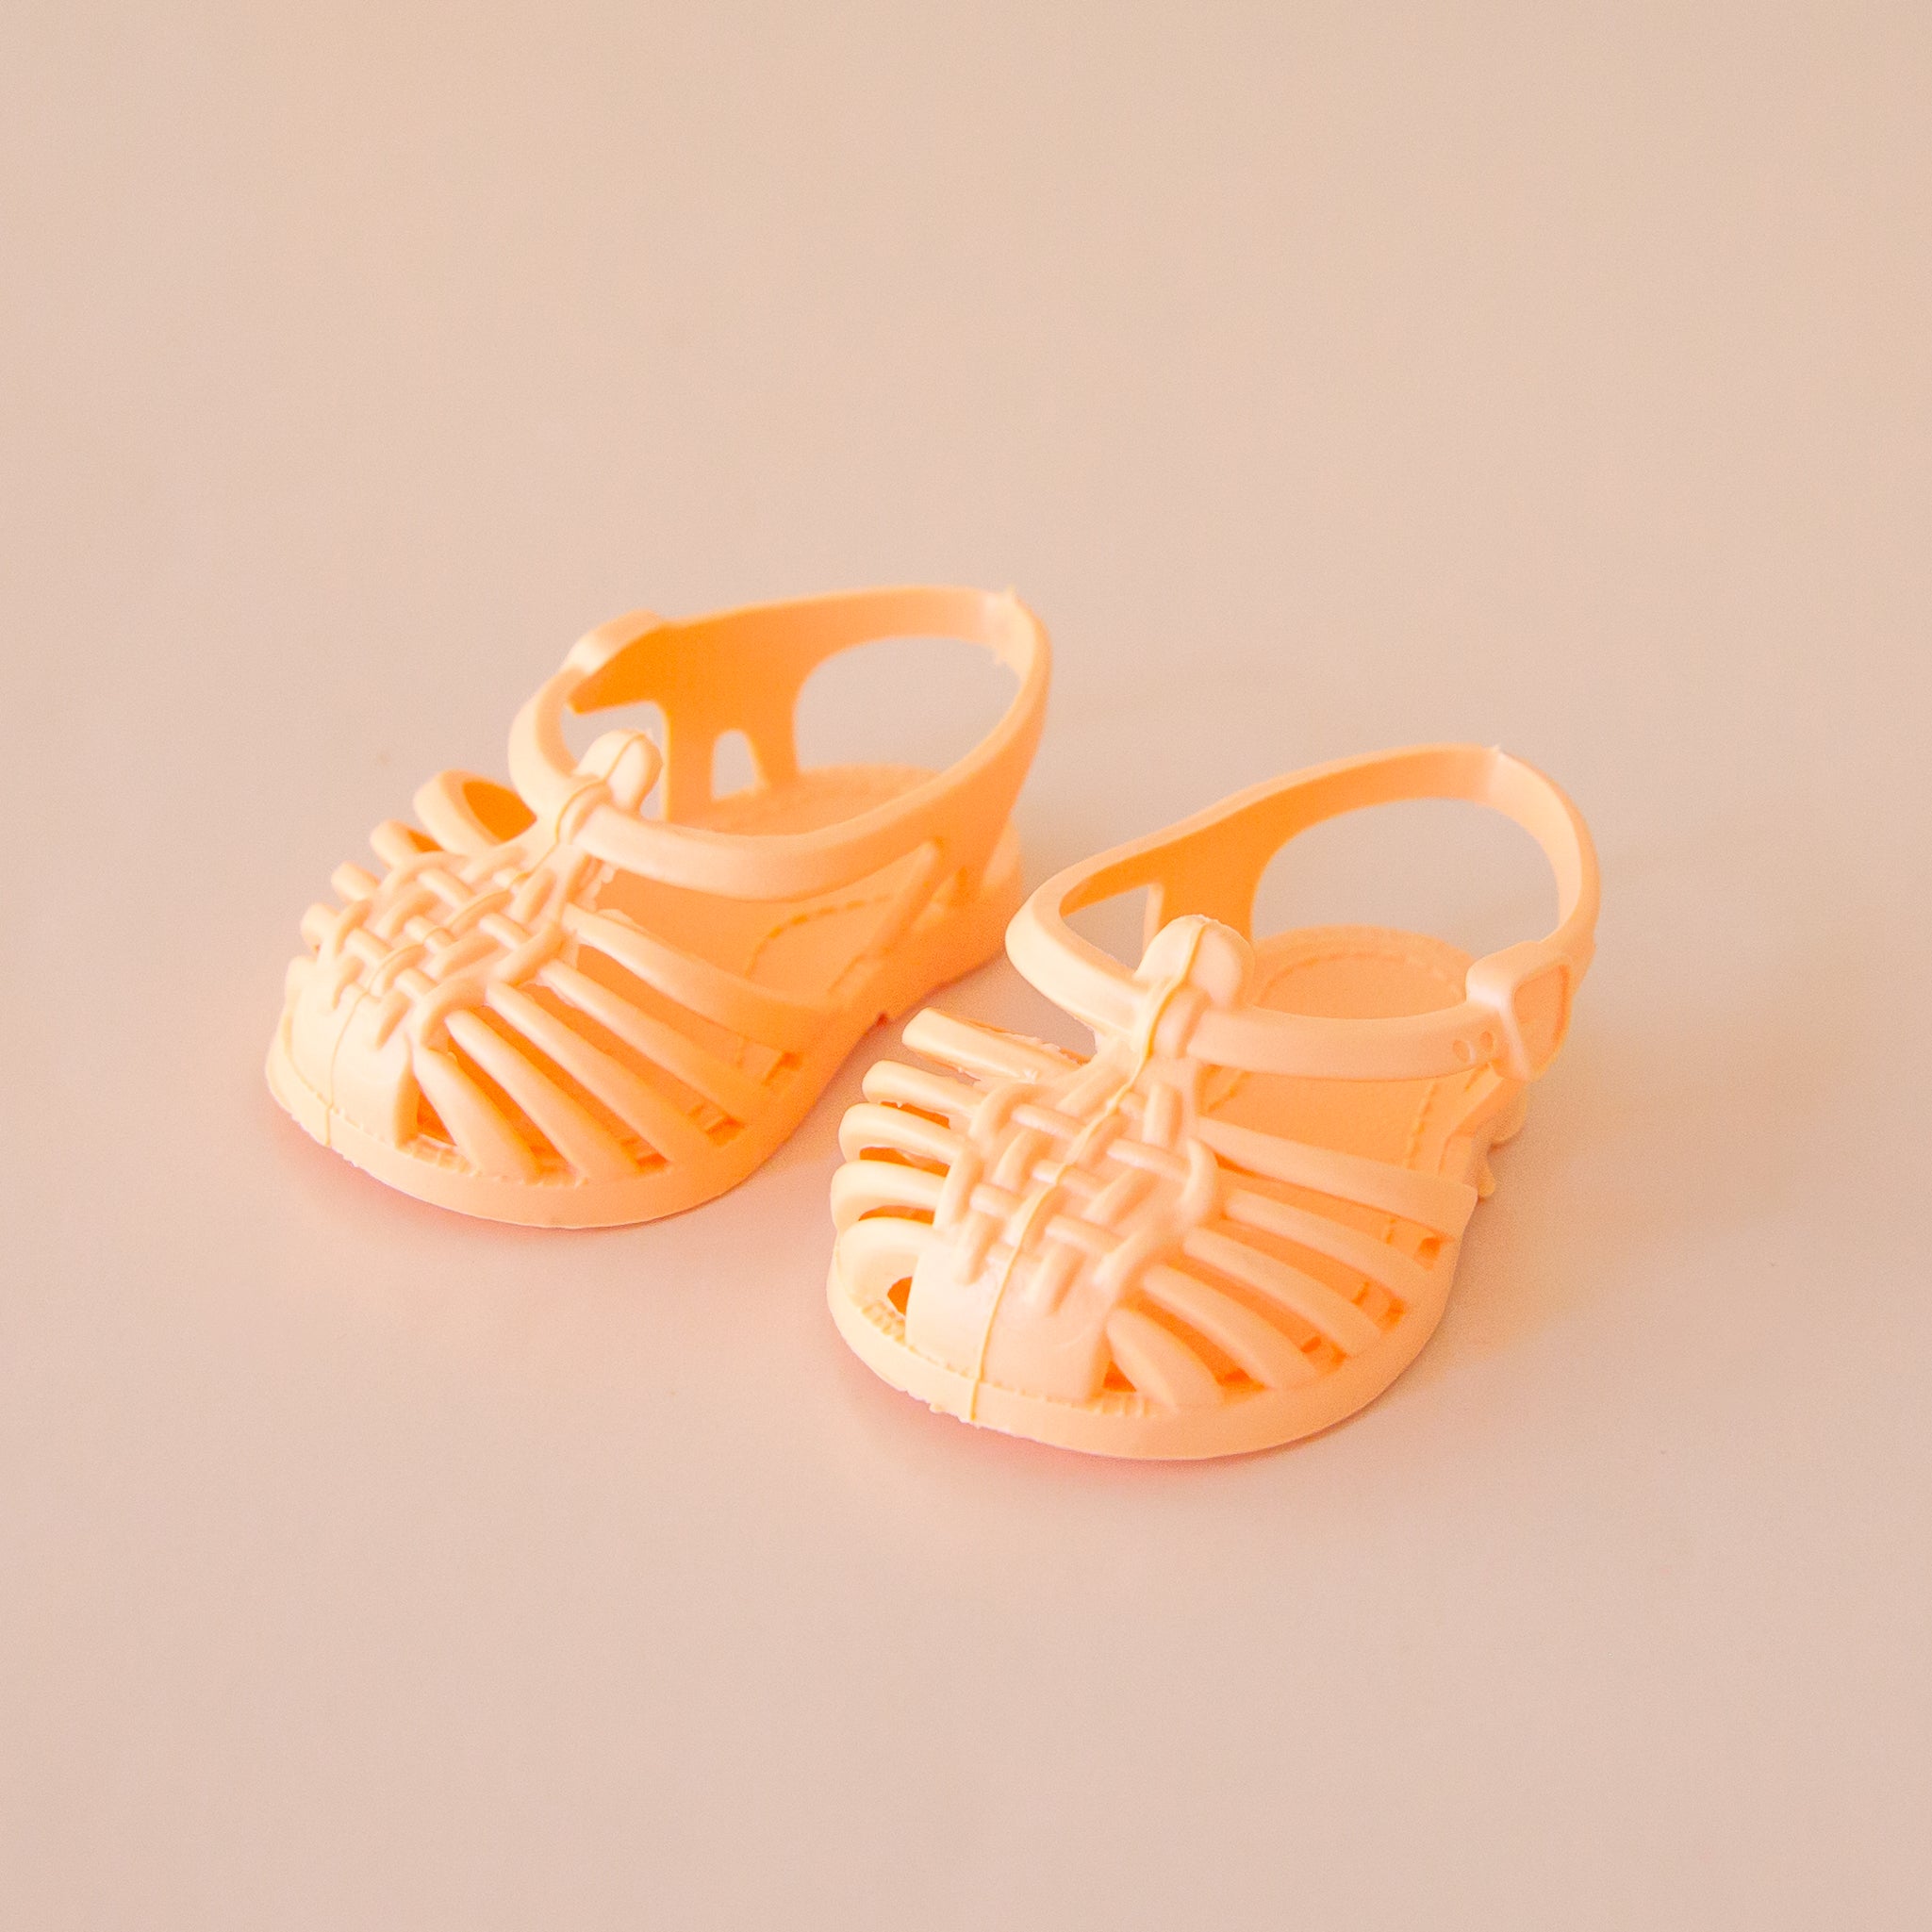 A pair of doll sandals in a peachy orange shade. 